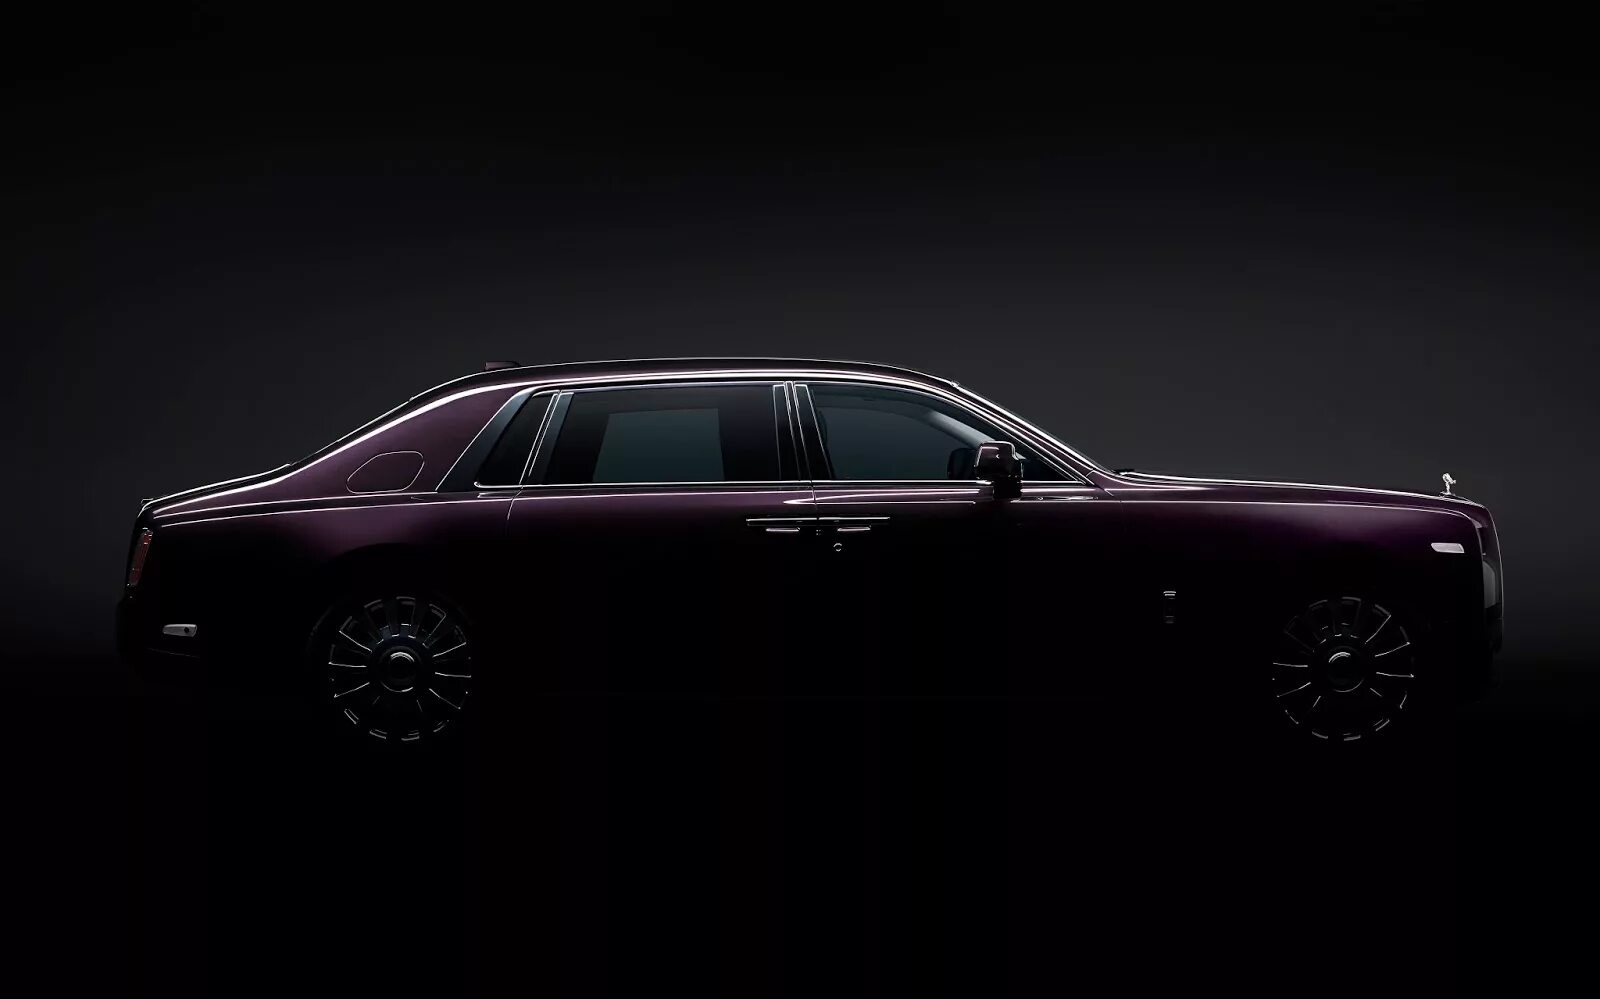 Rr spectre. Rolls Royce Phantom 8 EWB. Rolls Royce Phantom EWB. Rolls Royce Phantom EWB 2018. Rolls-Royce Phantom (VII).